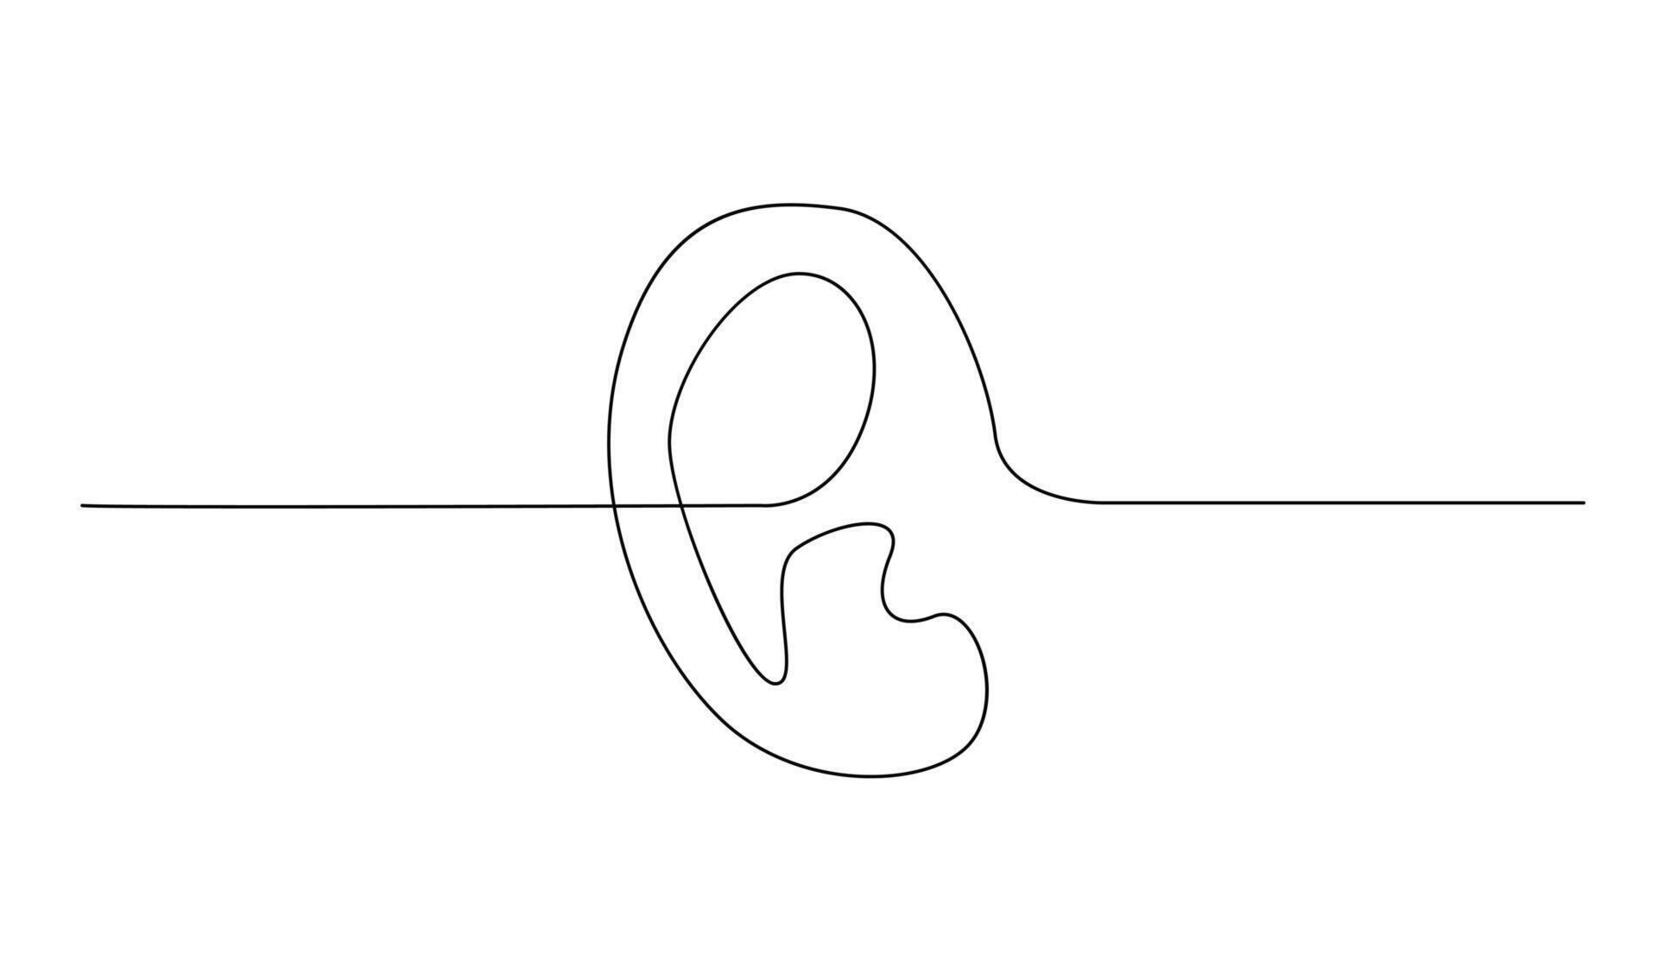 humano oído continuo uno línea dibujo. mundo sordo día soltero línea concepto vector